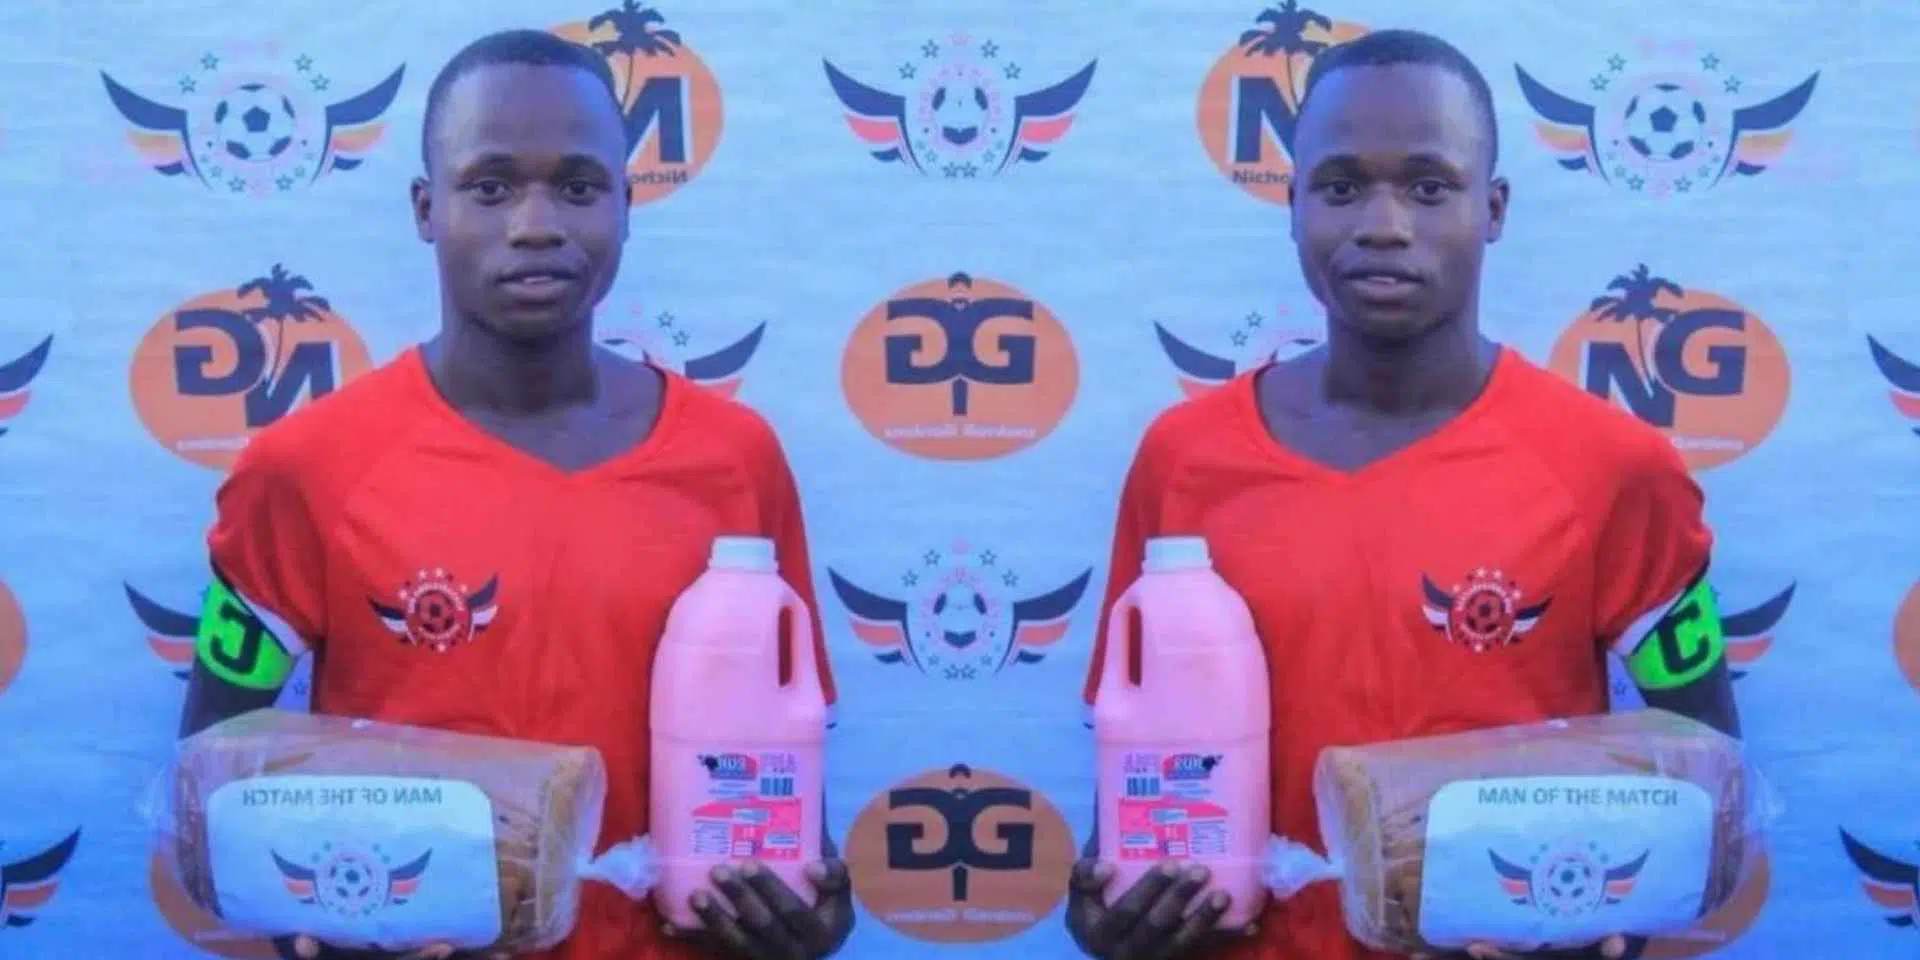 Man receives loaf of bread, yoghurt as Man of the Match award in Uganda